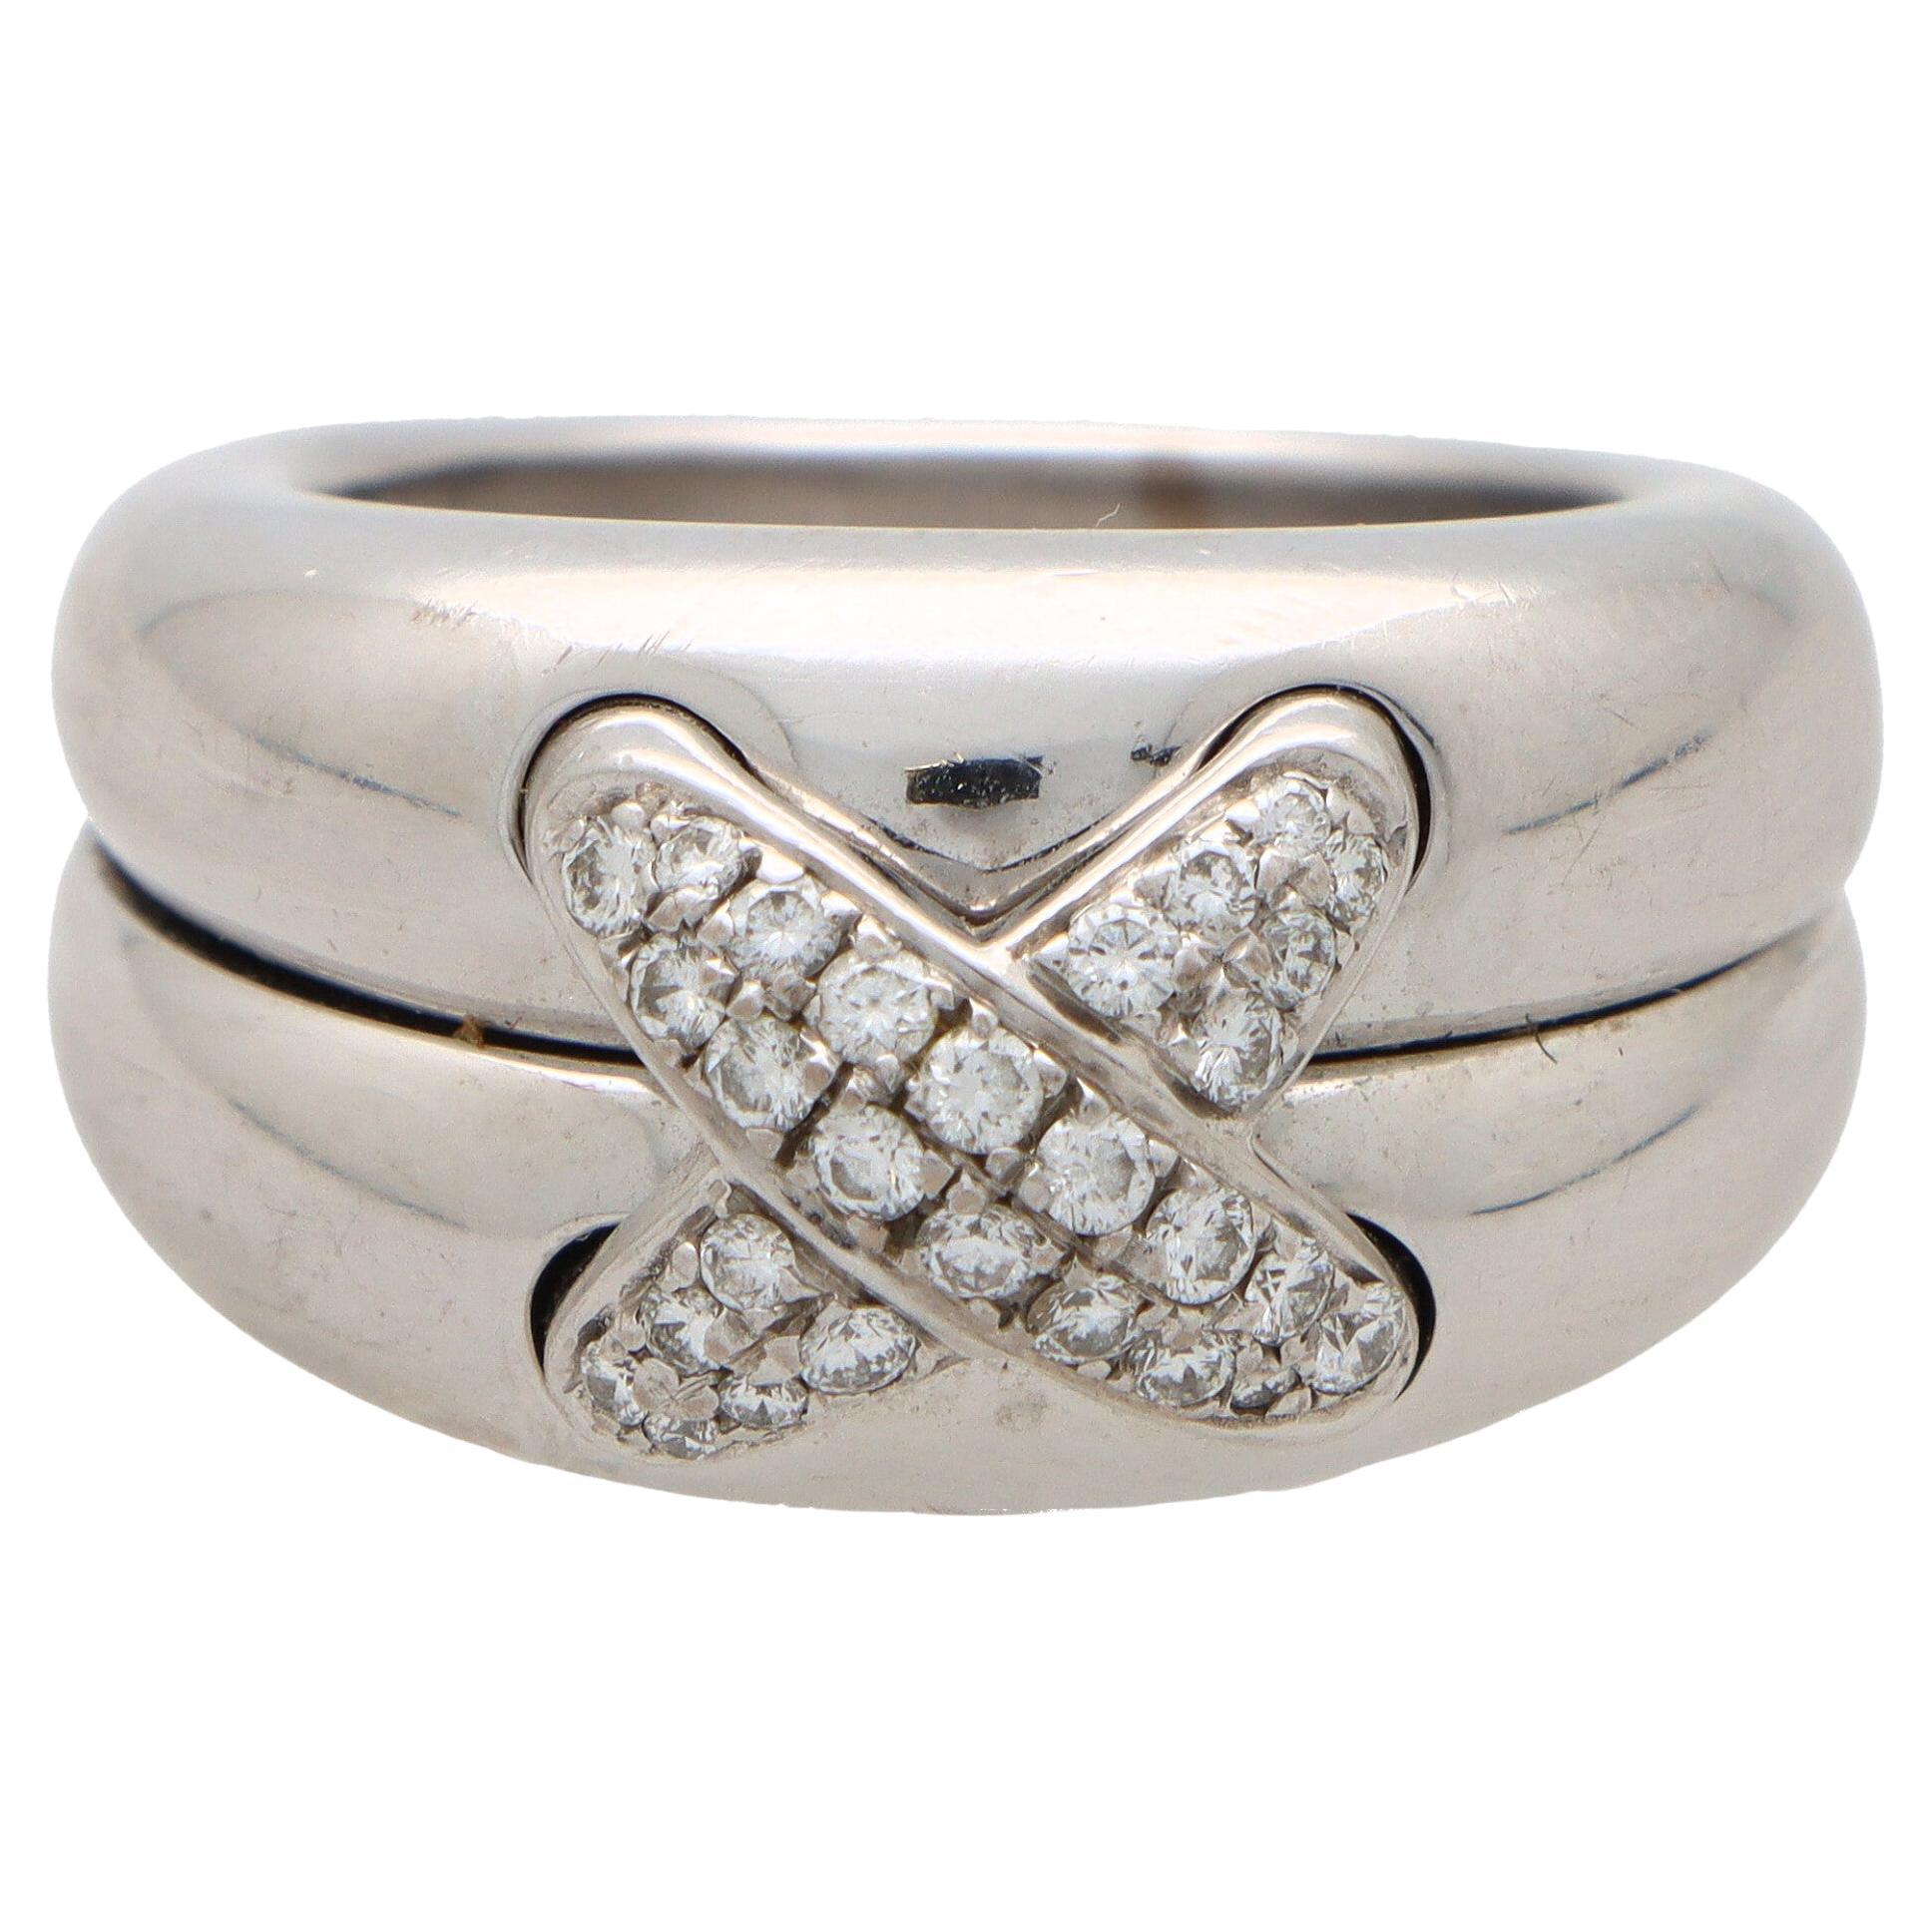 Vintage Chaumet Diamond Liens Bombe Ring Set in 18k White Gold 